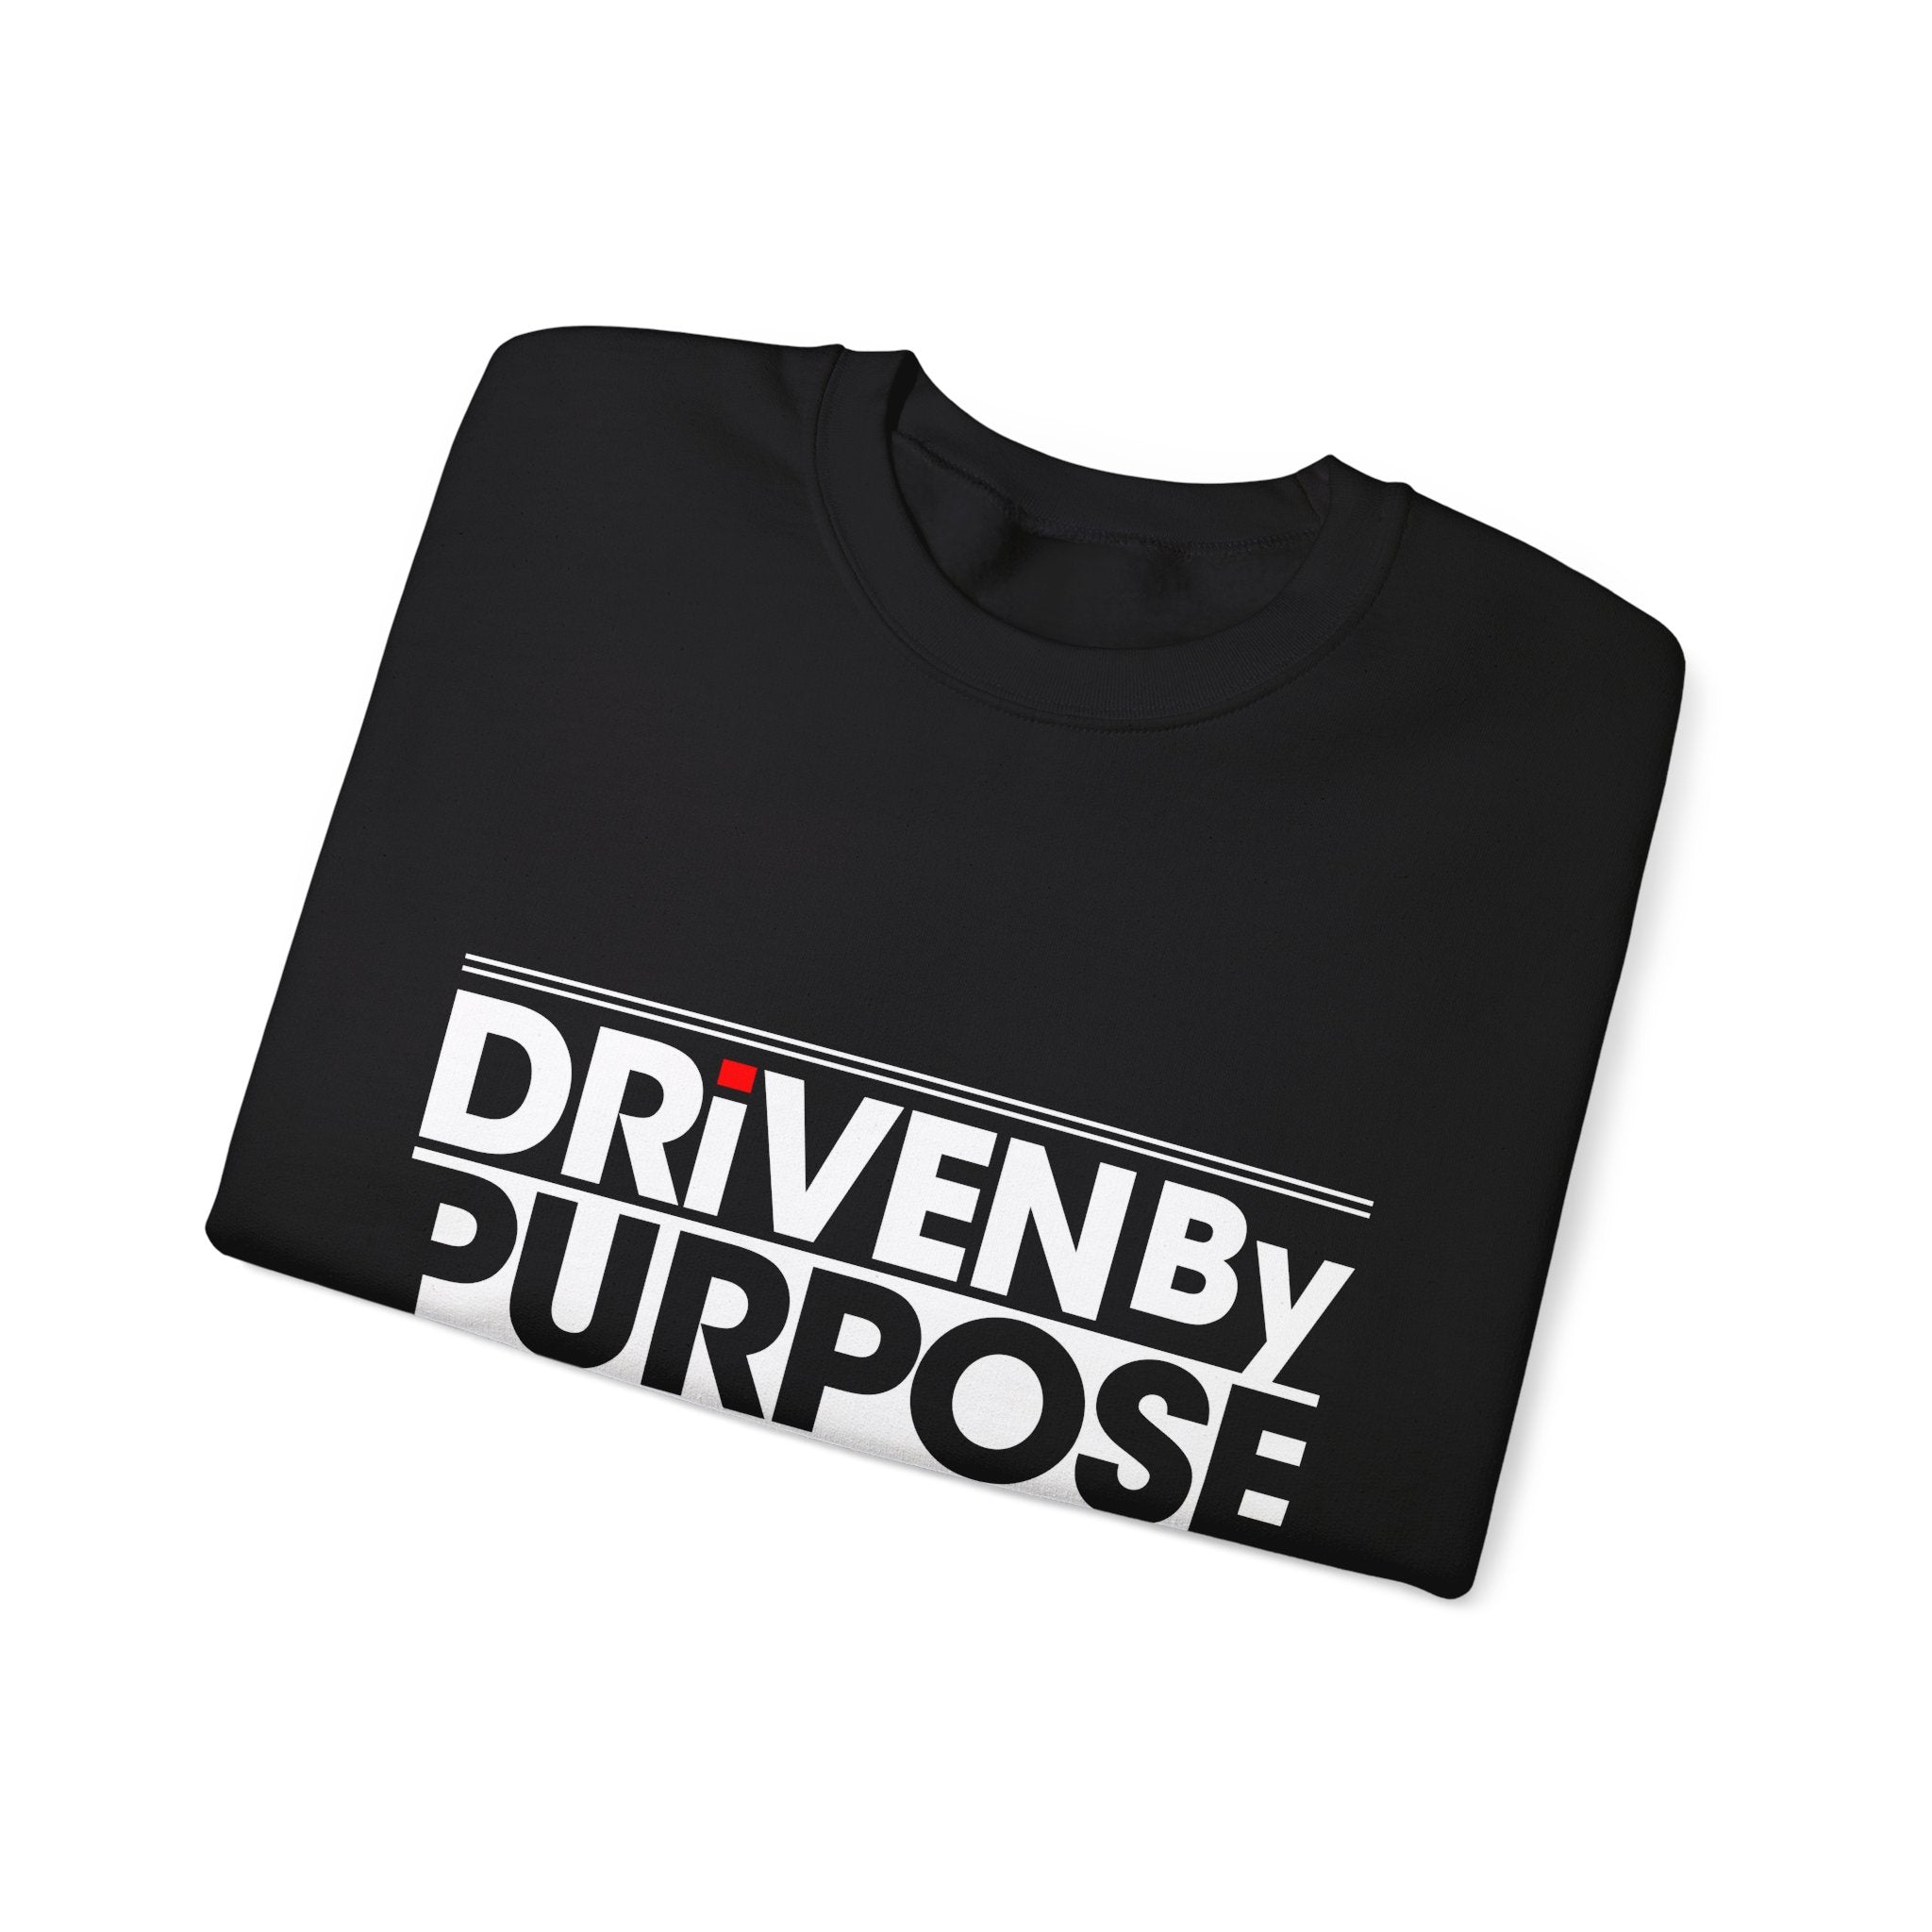 Driven by Purpose -  Sweatshirt